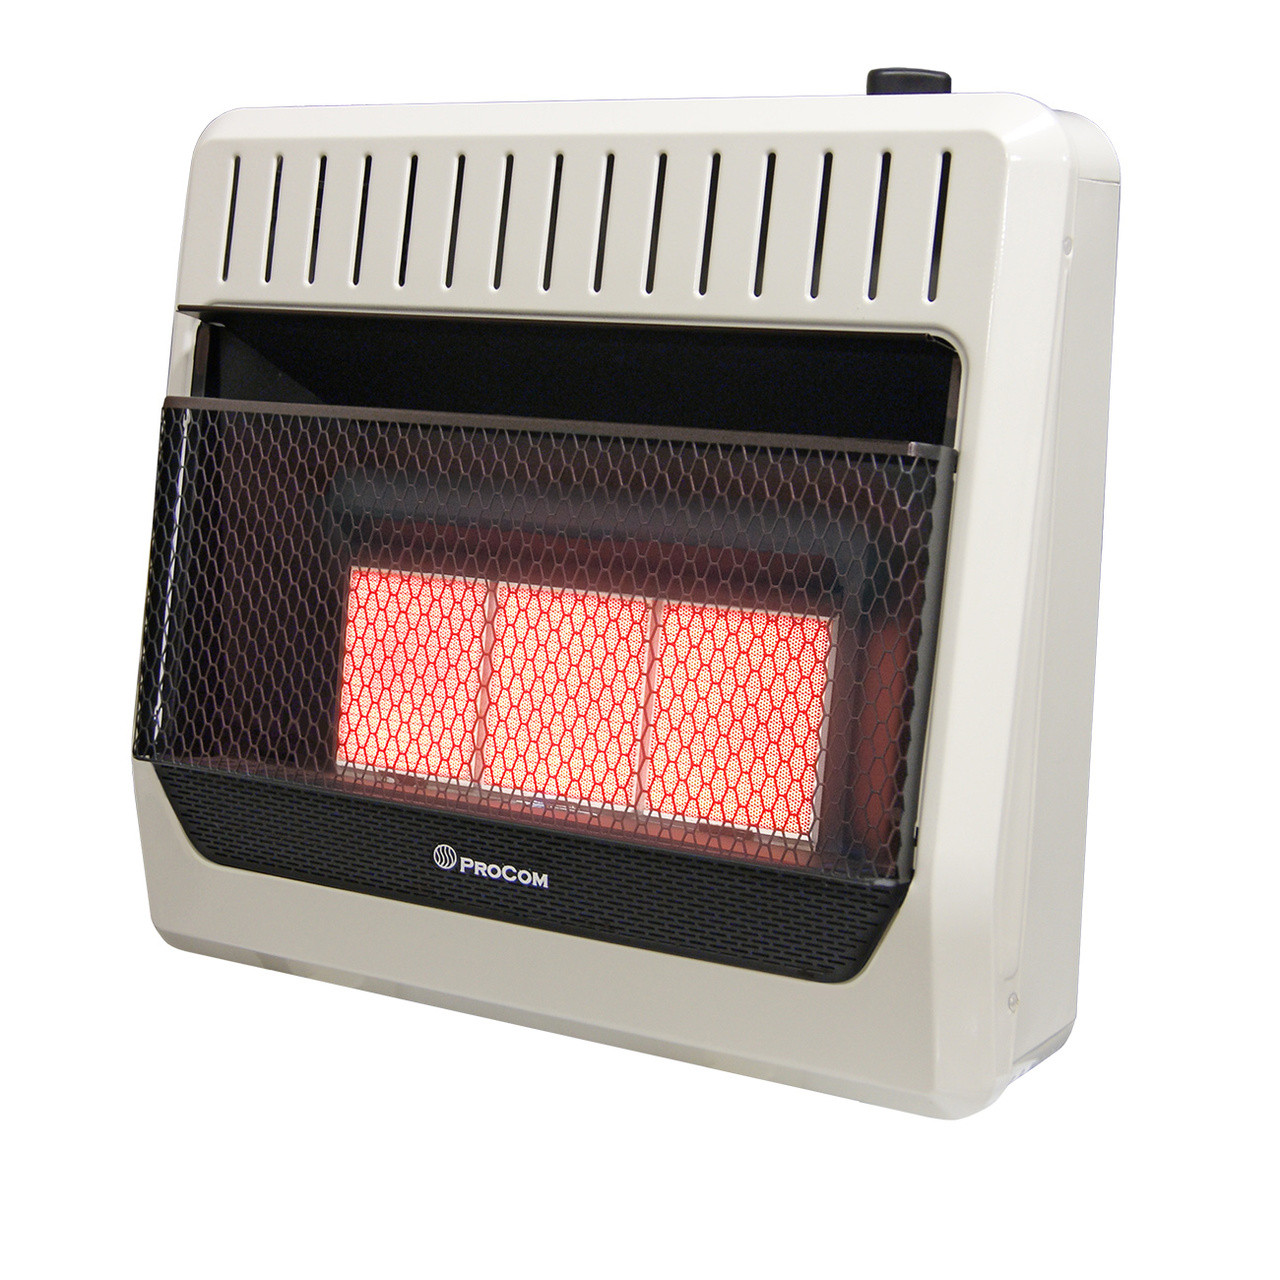 ProCom Heating Dual Fuel Ventless Infrared Plaque Heater - 30,000 BTU